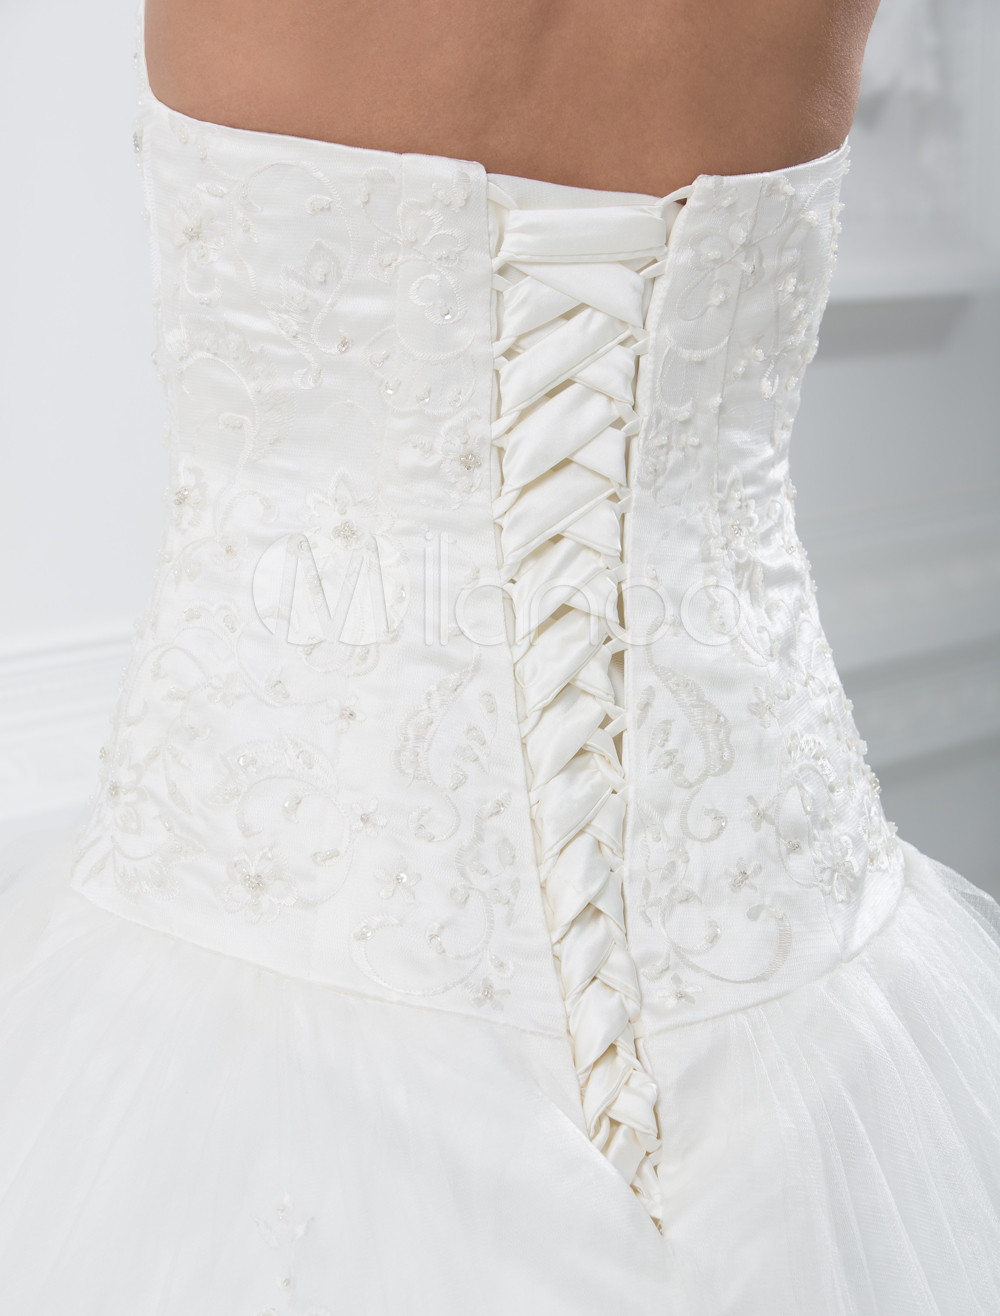 Fabulous White Halter A-line Sweep Satin Lace Wedding Dress - Milanoo.com